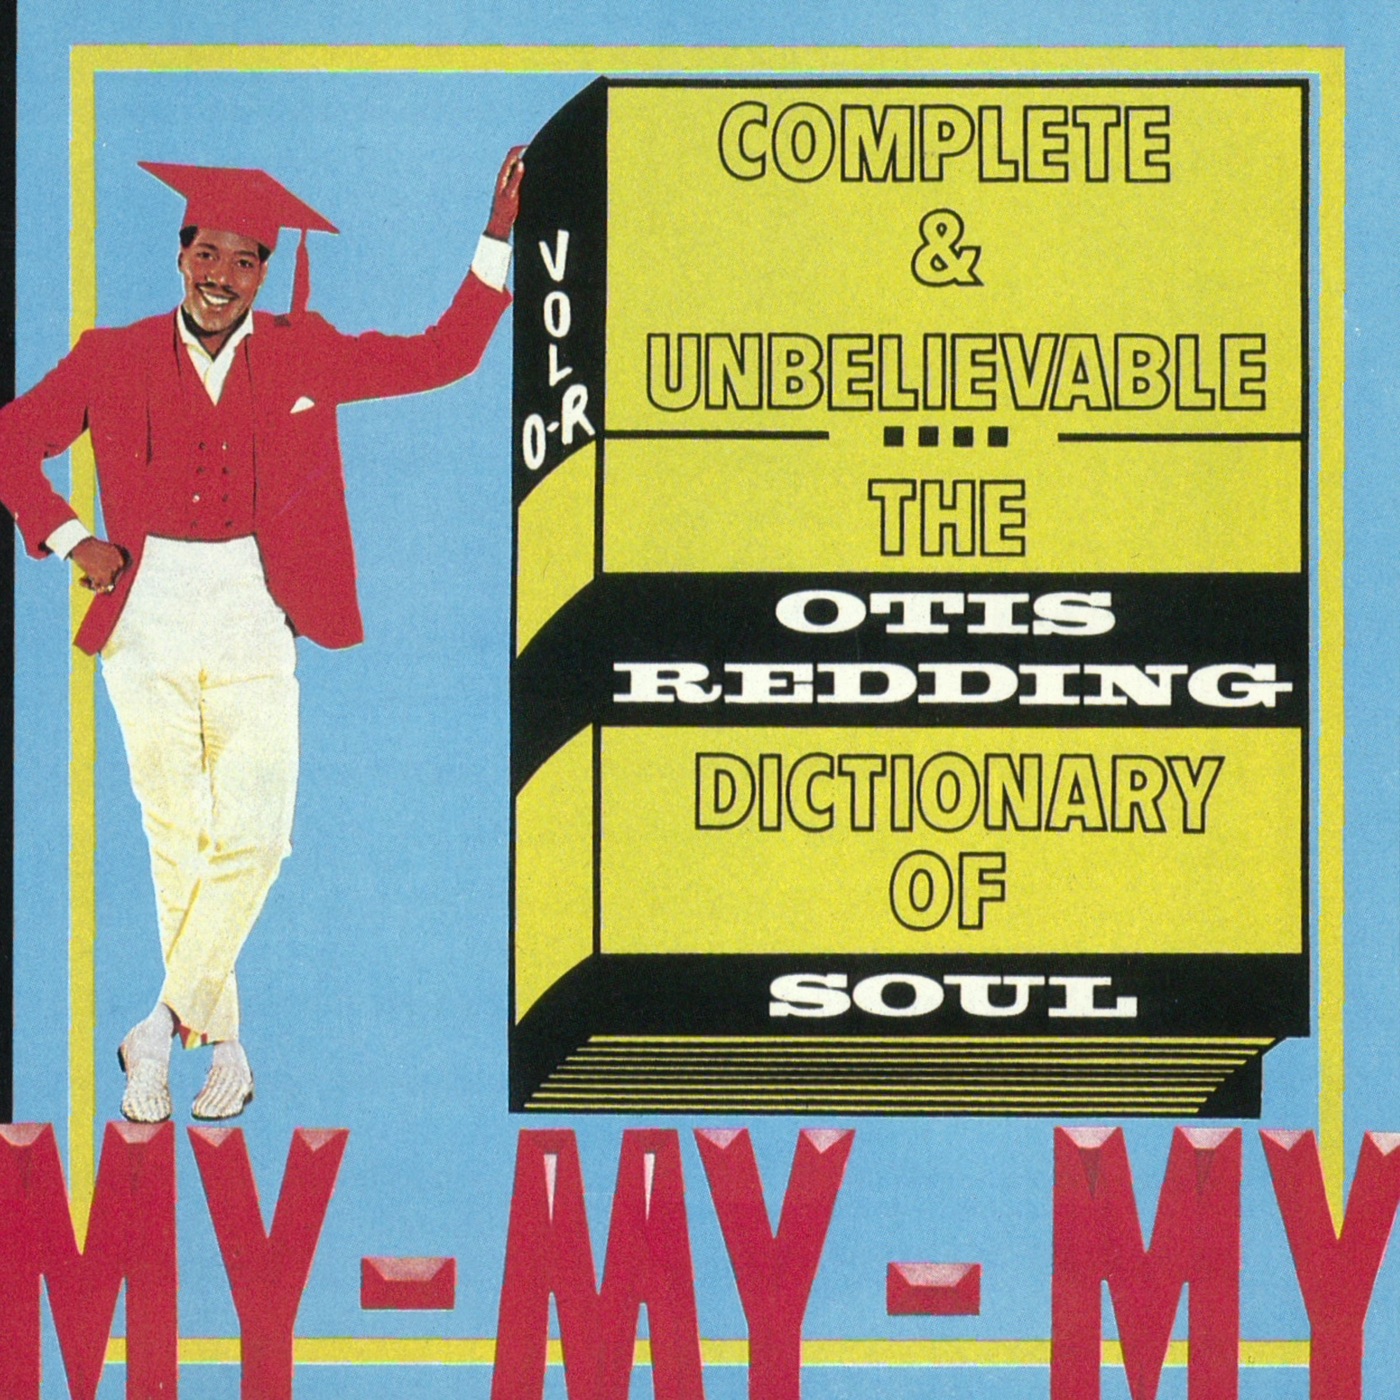 Complete & Unbelievable: The Otis Redding Dictionary of Soul by Otis Redding